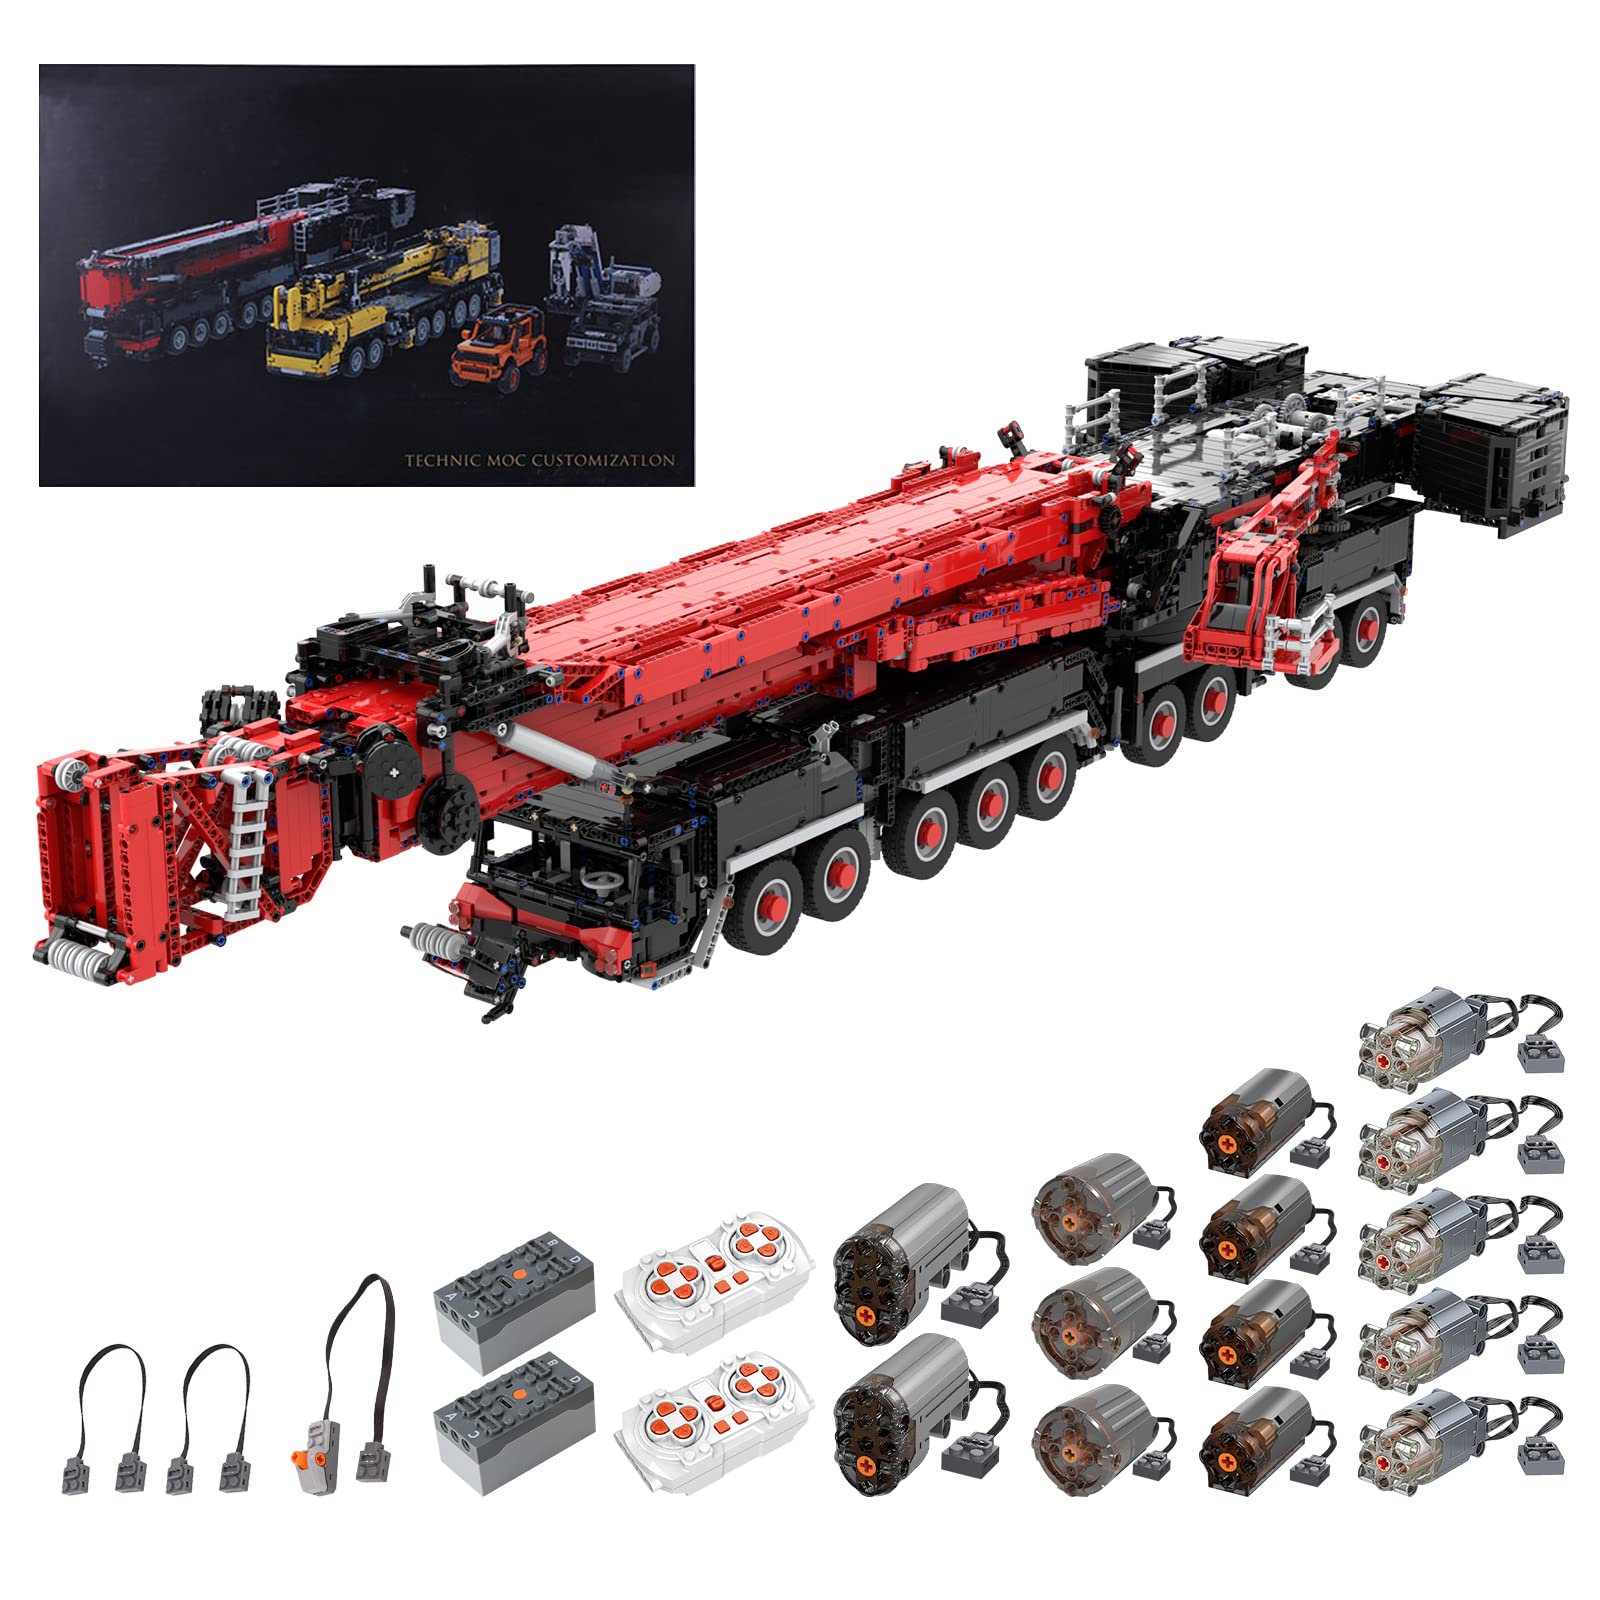 JoyMeet RC Crane Kit for Liebherr LTM 11200, 2.4G Remote Control Truck  Engineering Crane with 14 Motors, Compatible with Lego Technic - 8528+ PCS  